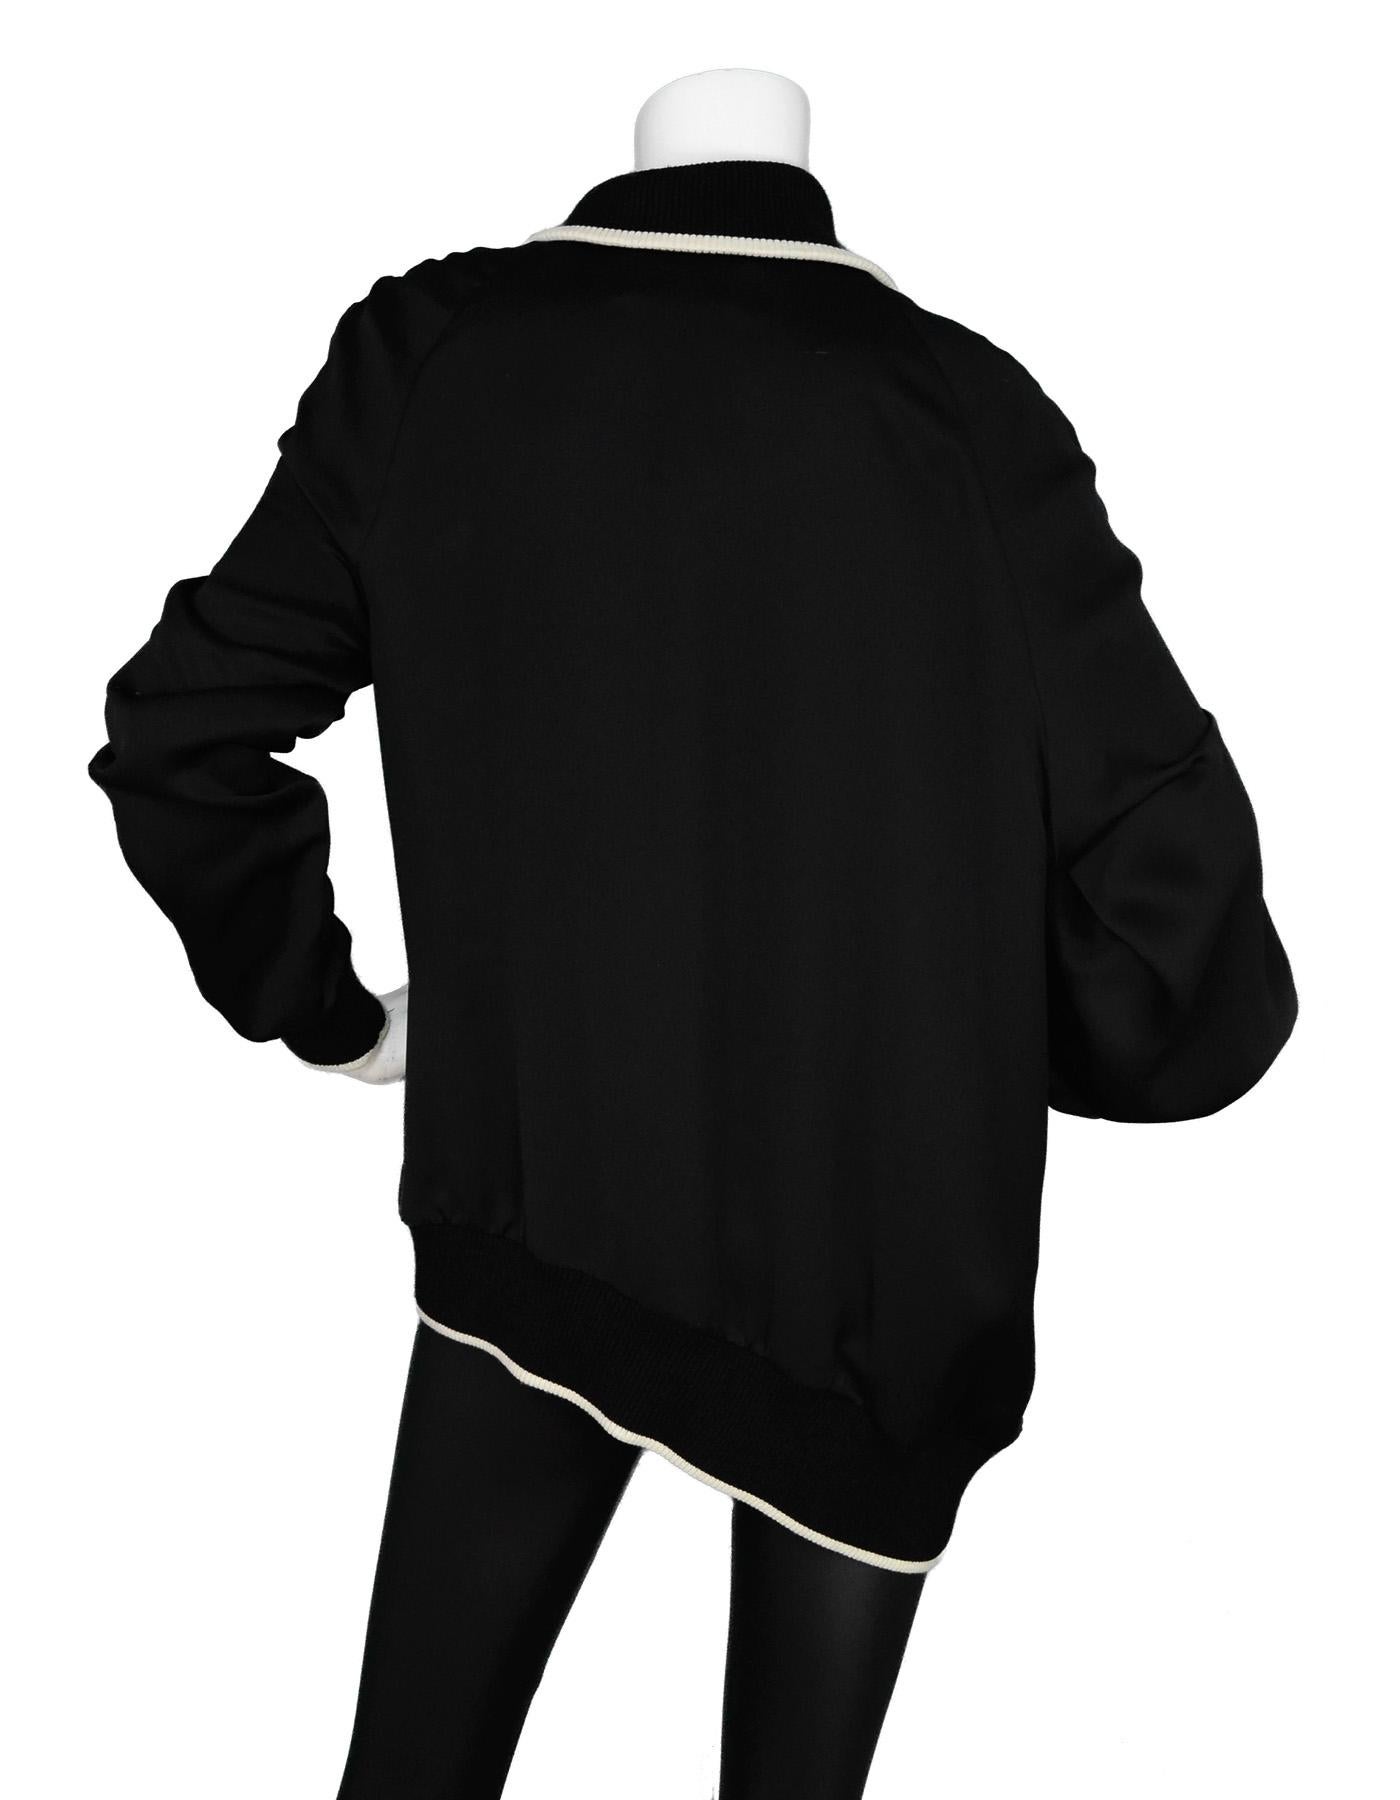 Women's or Men's Maison Martin Margiela Black Bomber Jacket W/ White Knit Trim Sz M